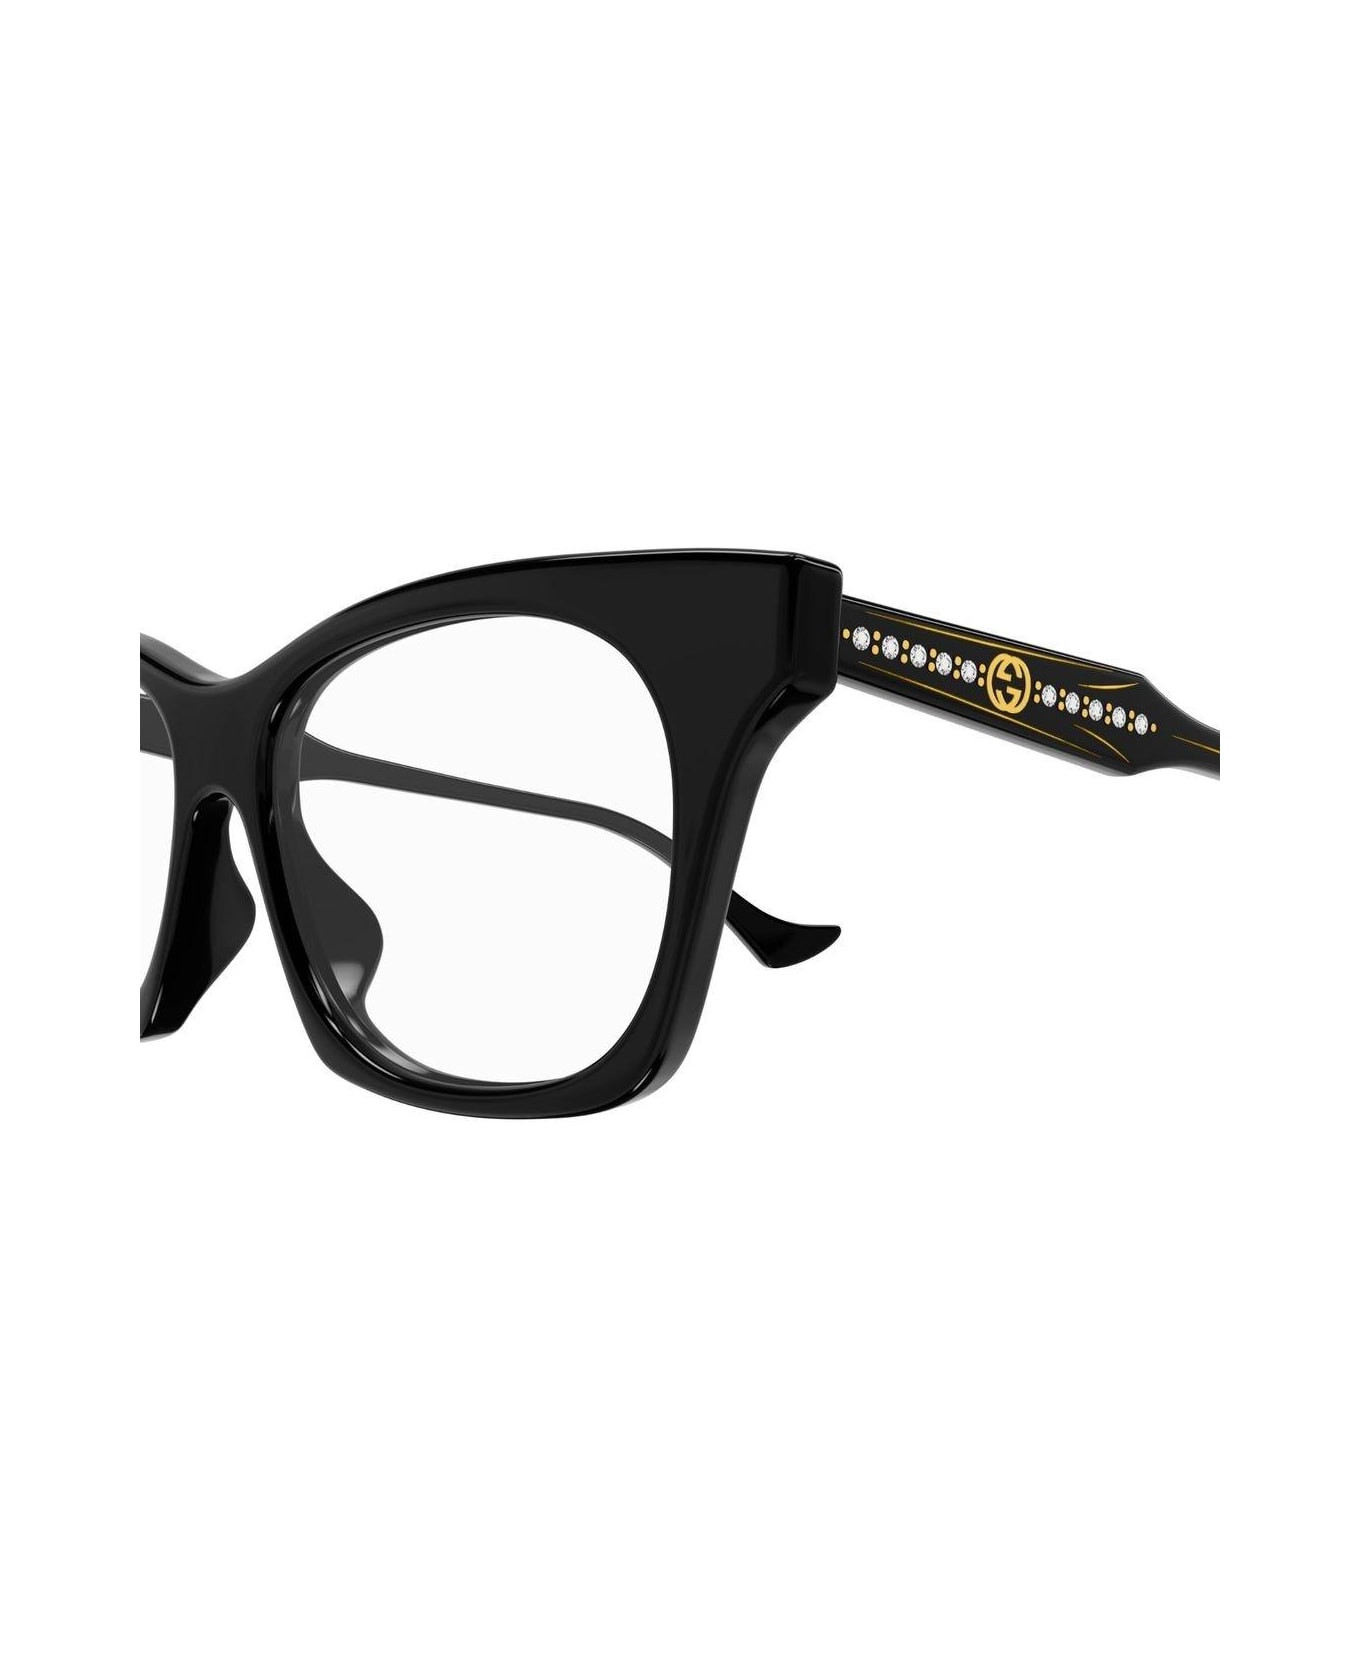 Gucci Eyewear Cat Eye Frame Glasses Glasses - 001 BLACK BLACK TRANSPARENT